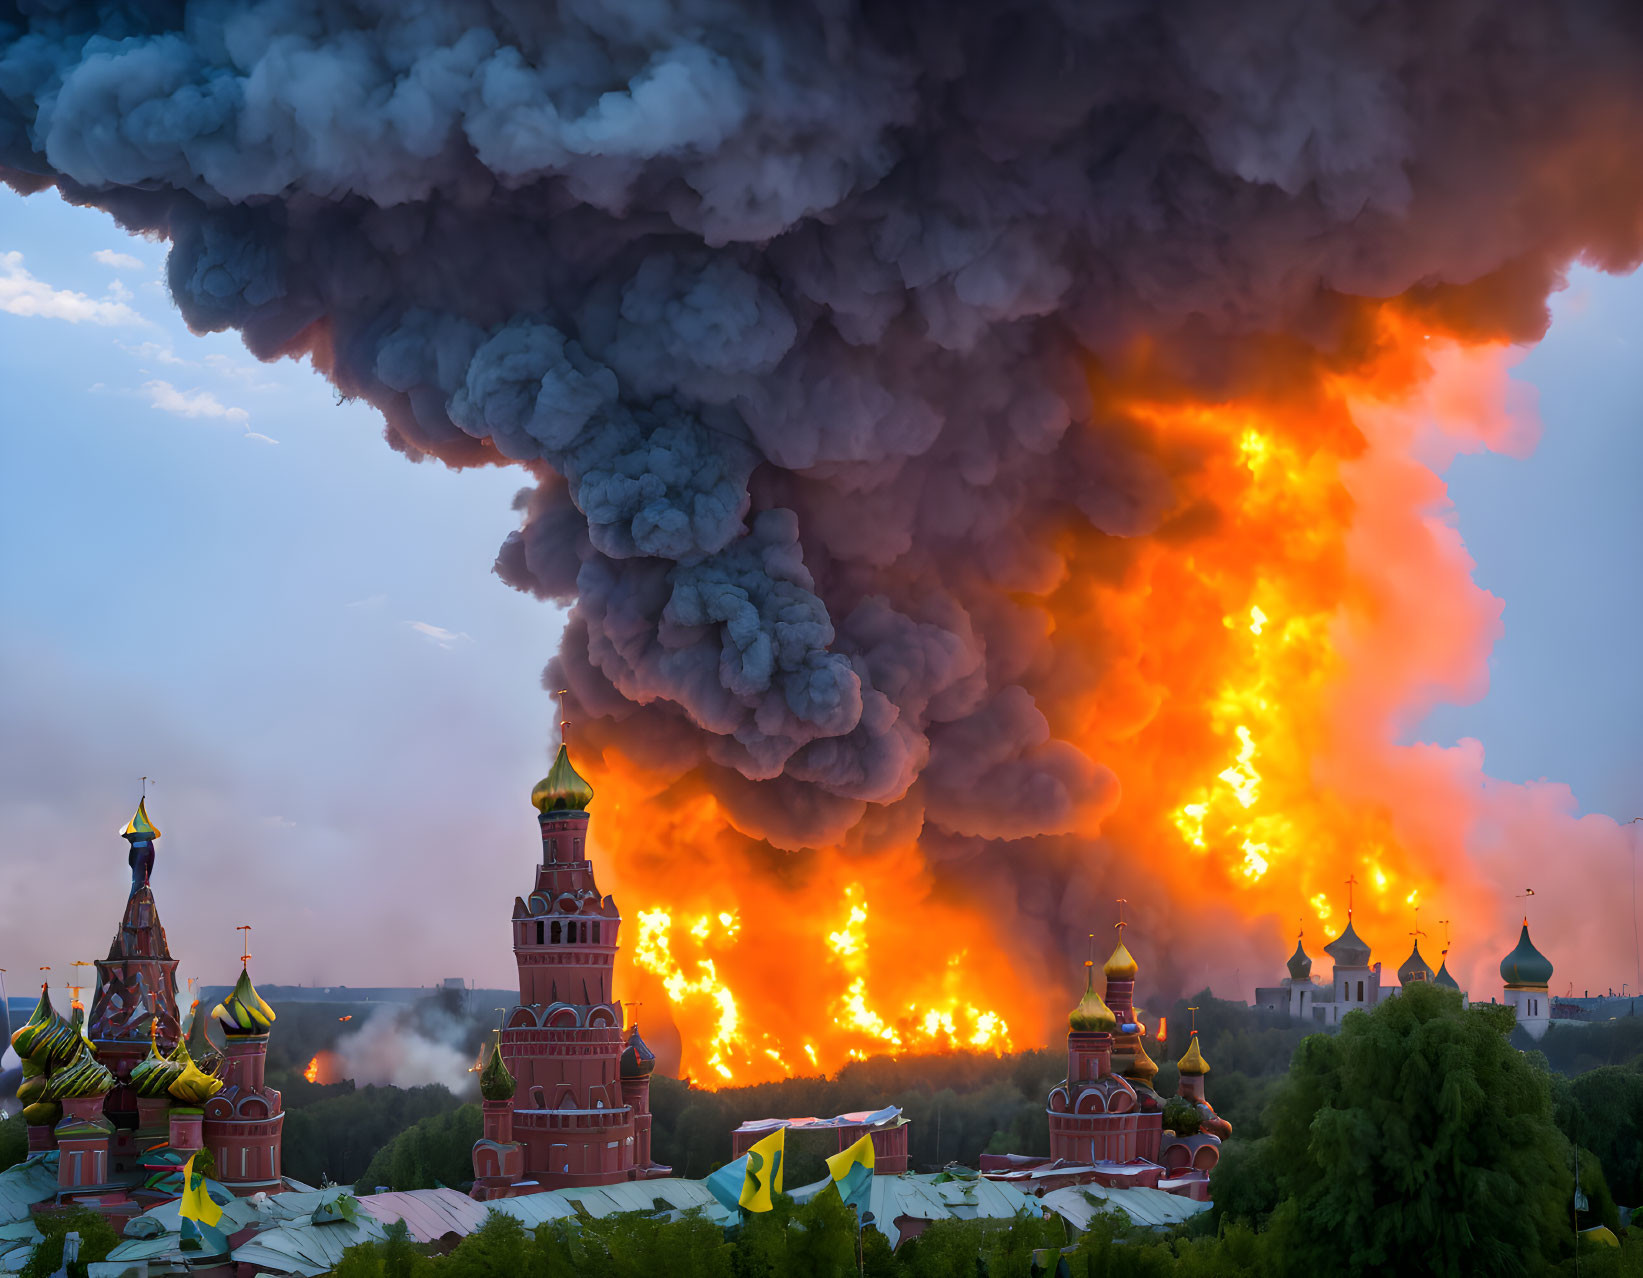 Victory of Ukraine on the ruins of the kremlin